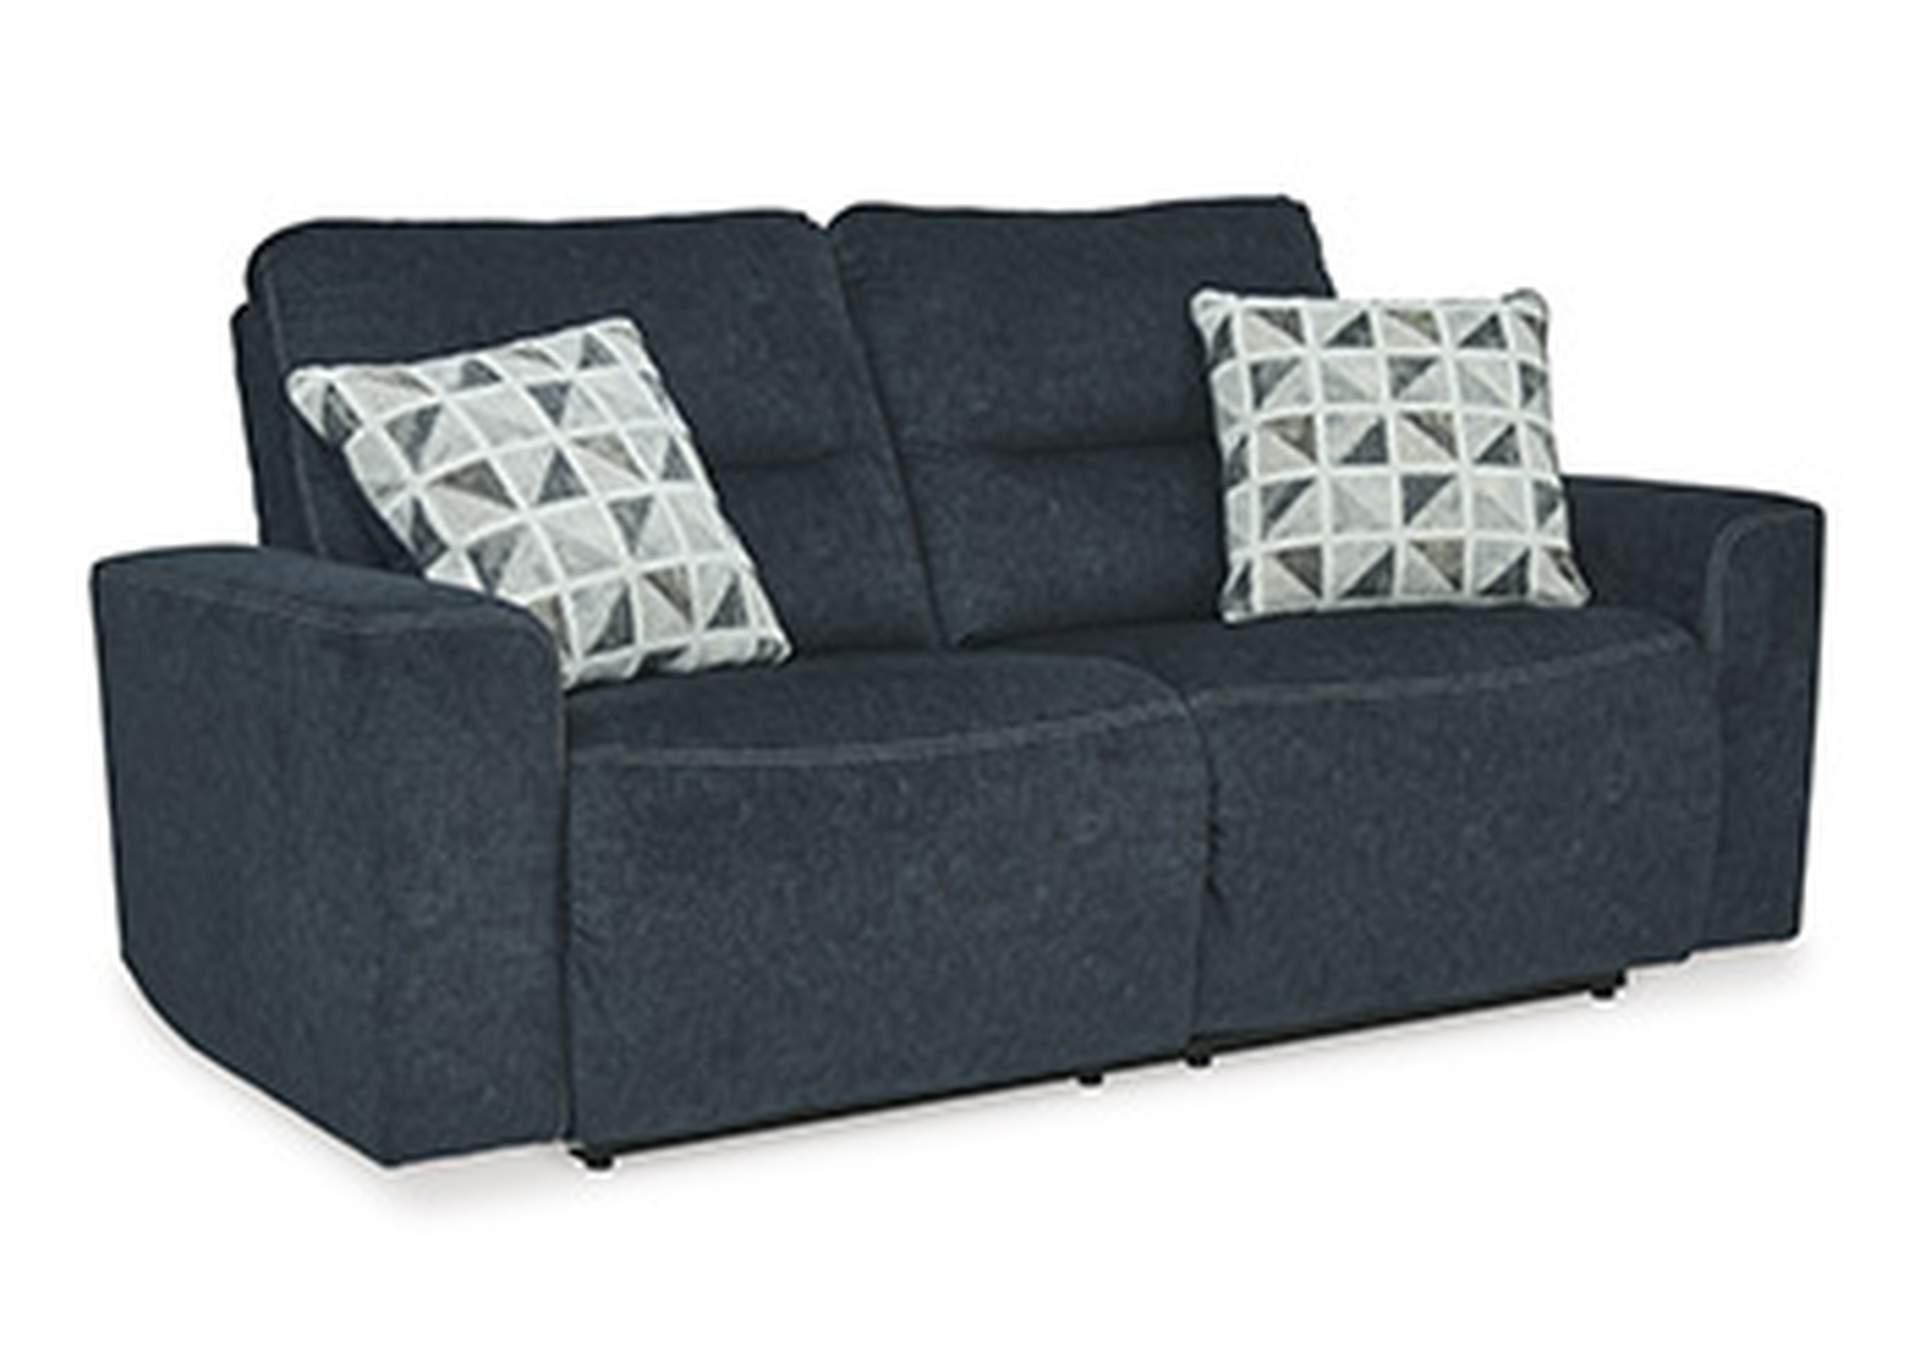 Paulestein Power Reclining Sofa,Signature Design By Ashley